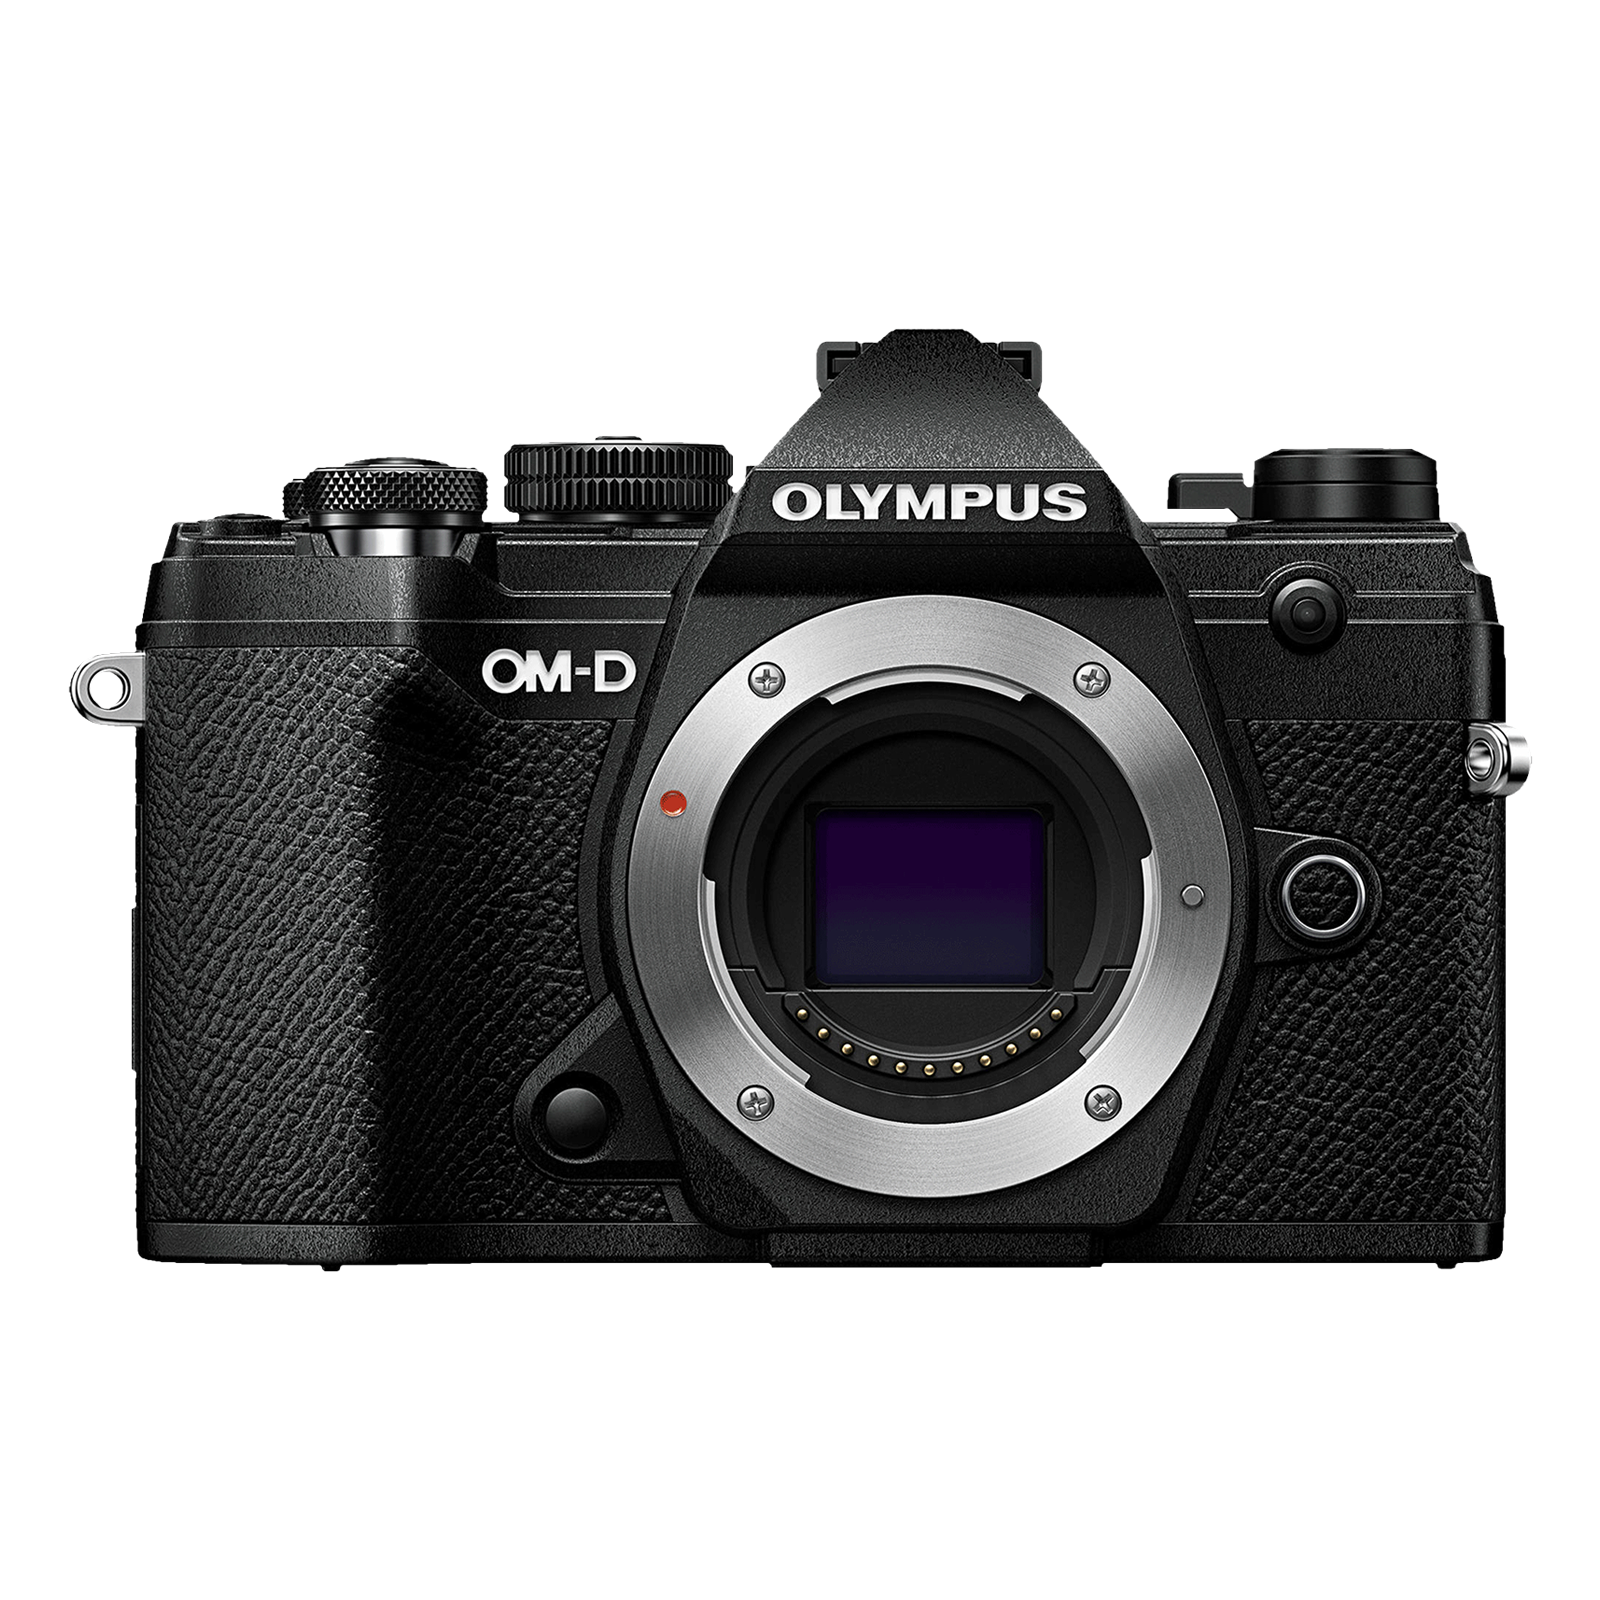 OLYMPUS OM-D E-M5 Mark III 20.4MP Mirrorless Camera (Body Only, 17.4 x 13.0  mm Sensor, Built-in 5-Axis Sensor)